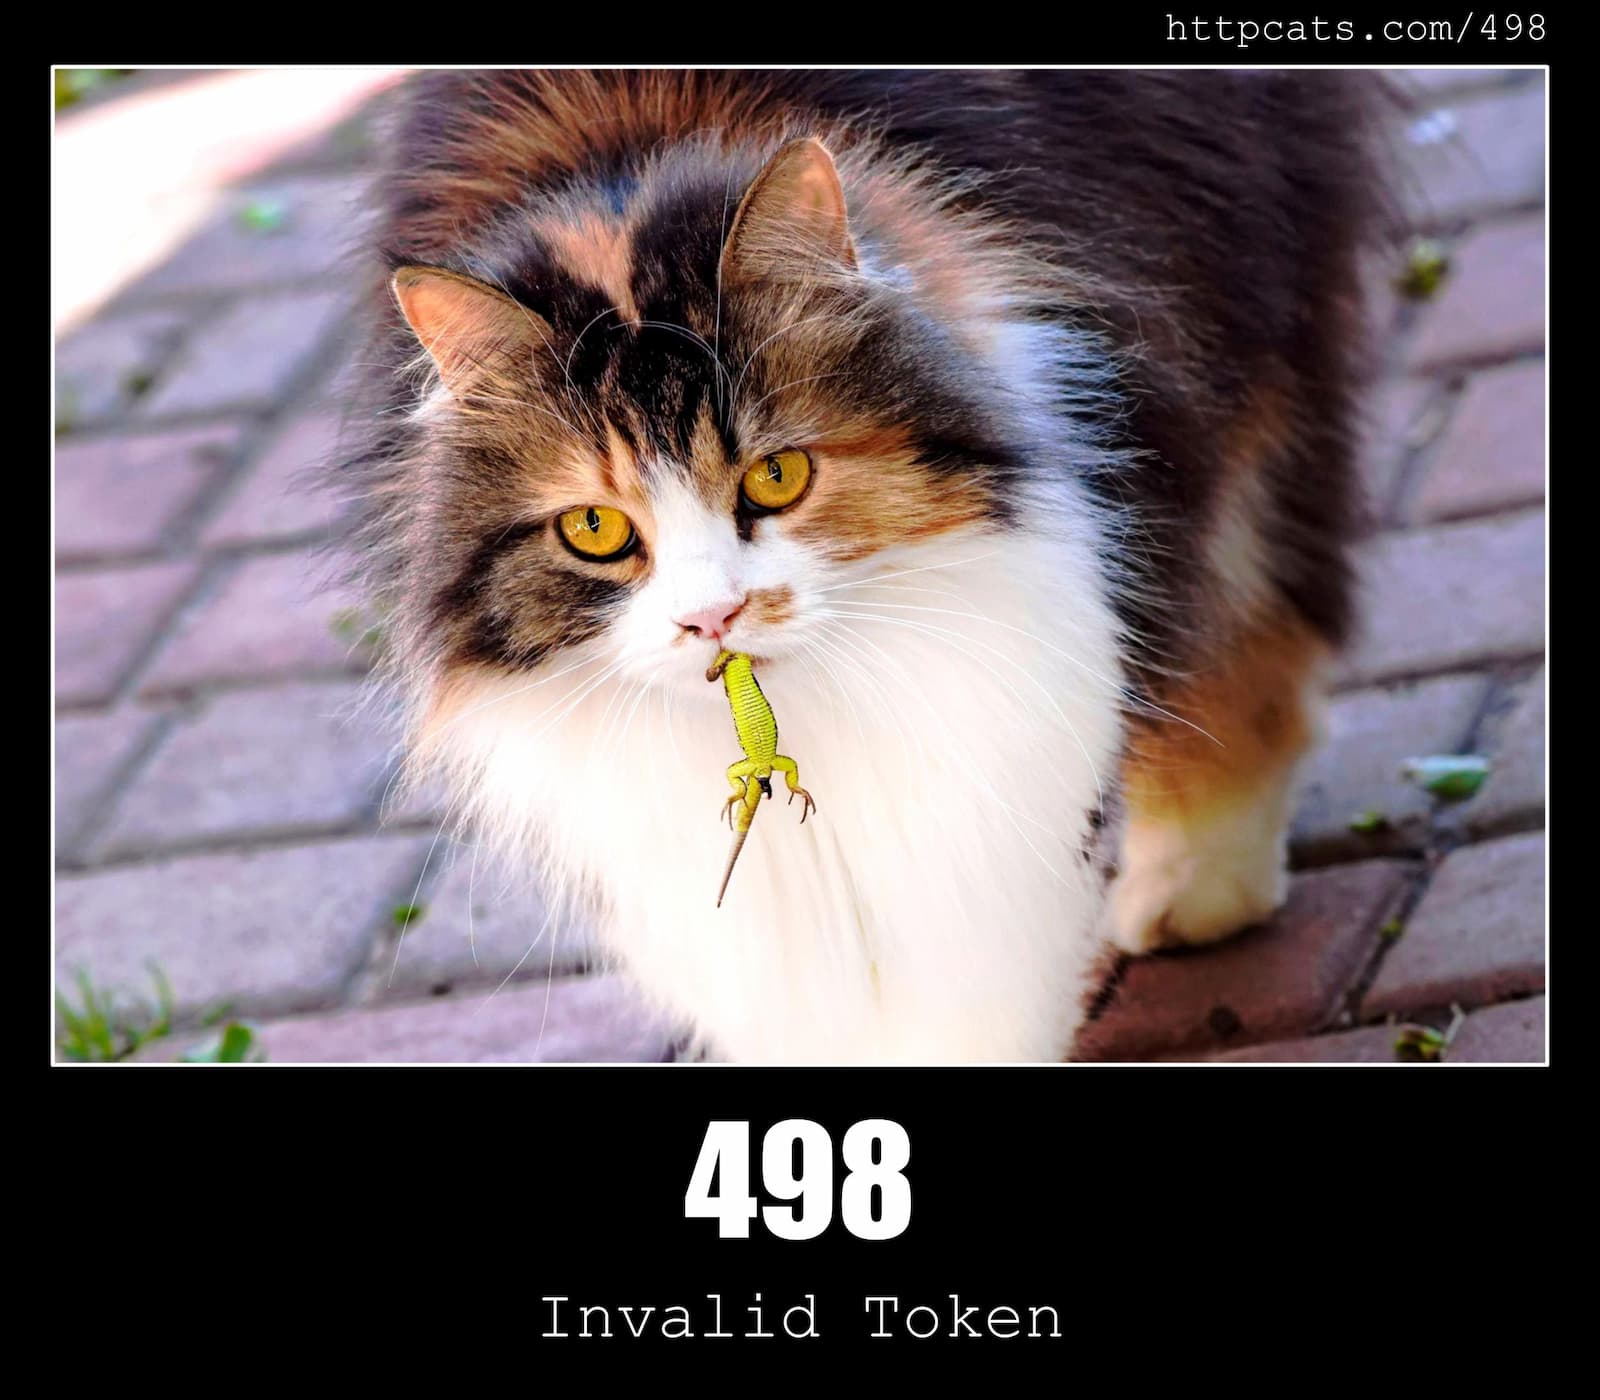 HTTP Status Code 498 Invalid Token & Cats